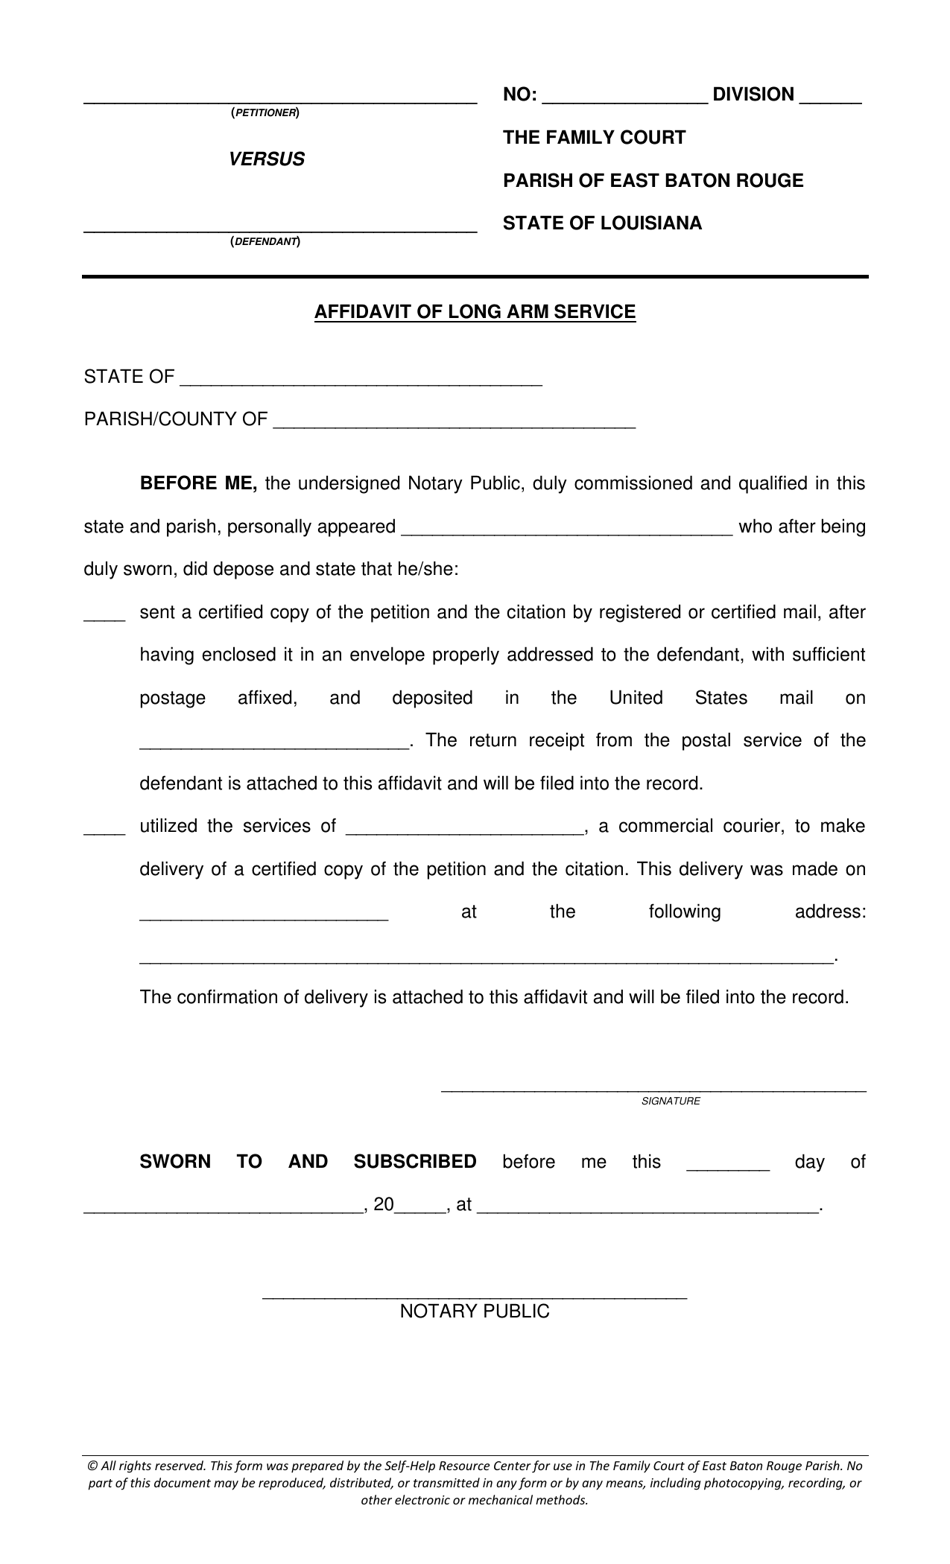 Affidavit of Long Arm Service - Parish of East Baton Rouge, Louisiana, Page 1